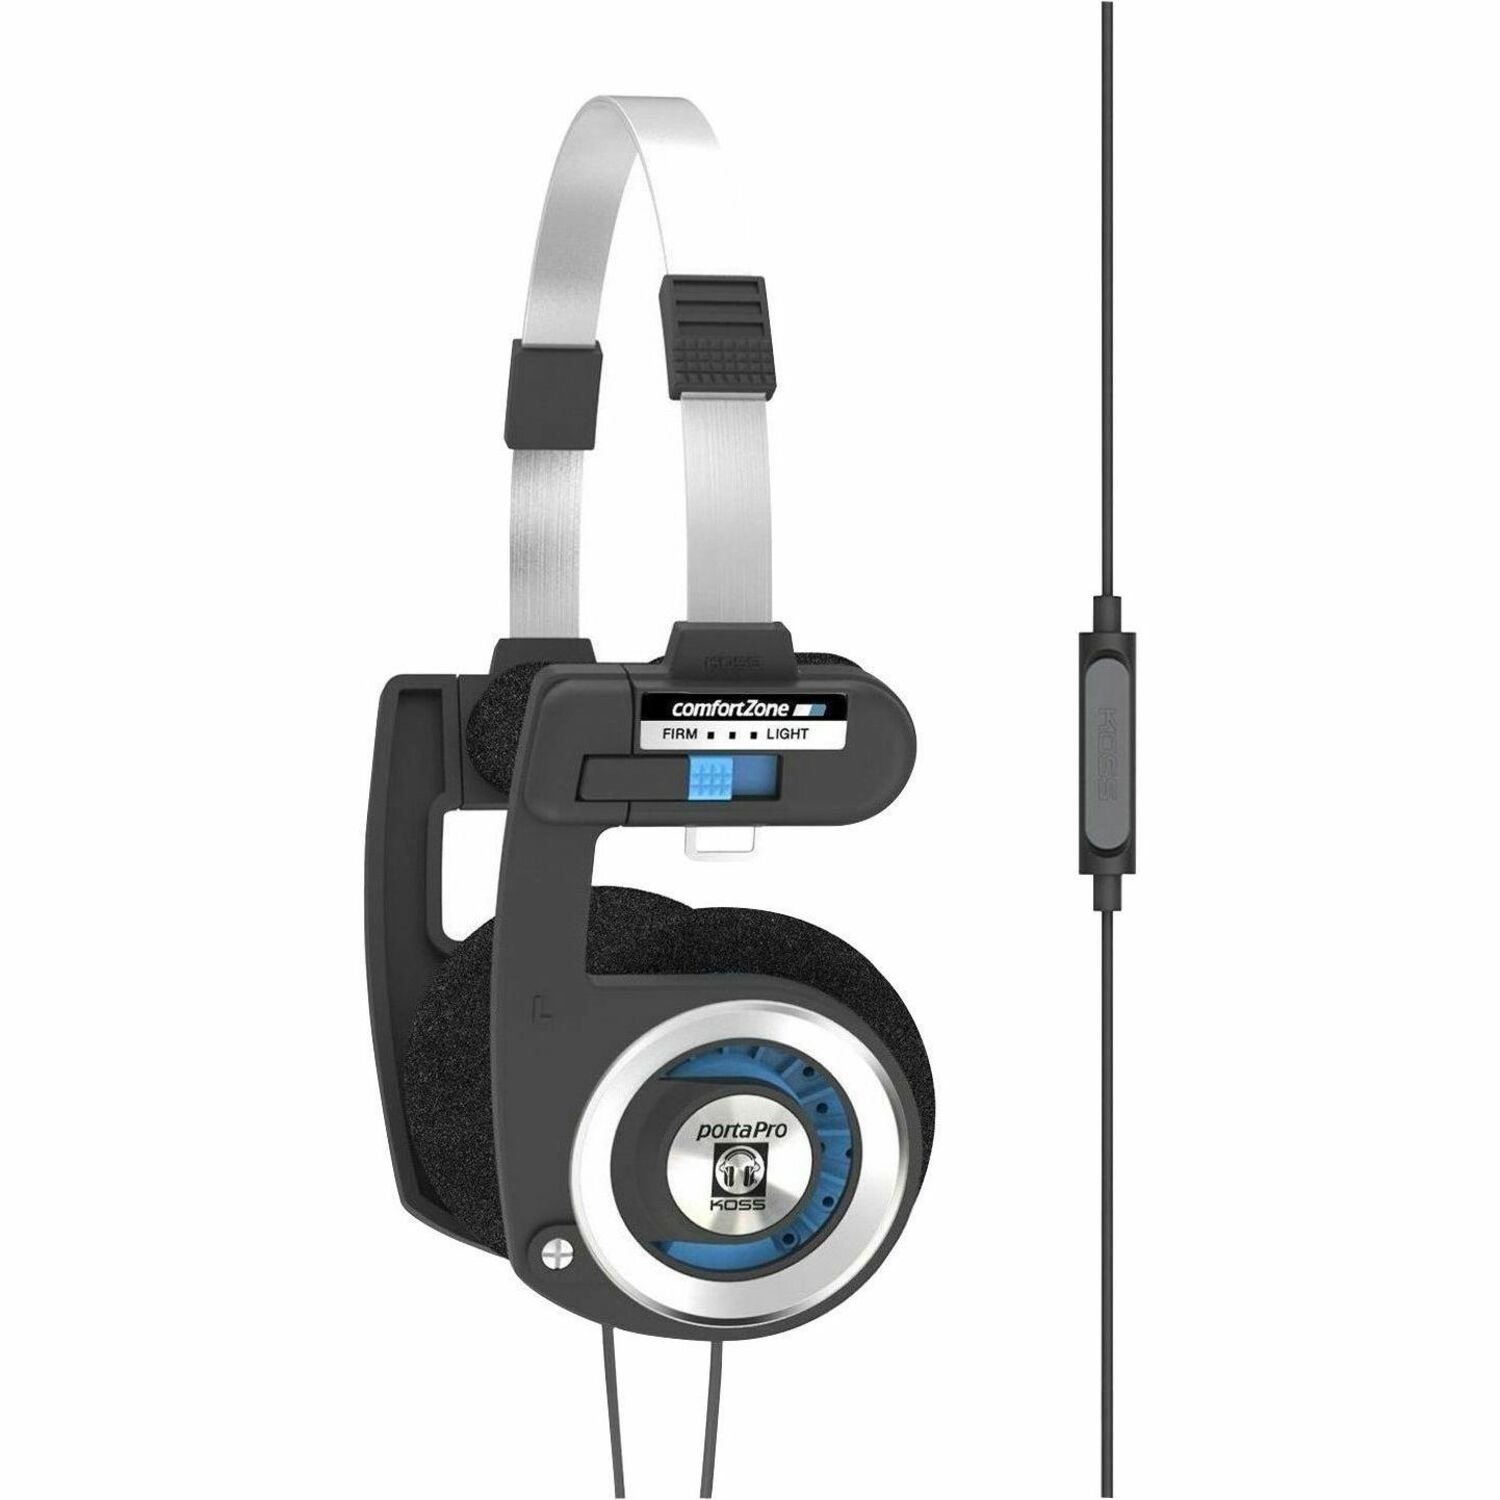 Koss Porta Pro Mic/Remote On Ear Headphones